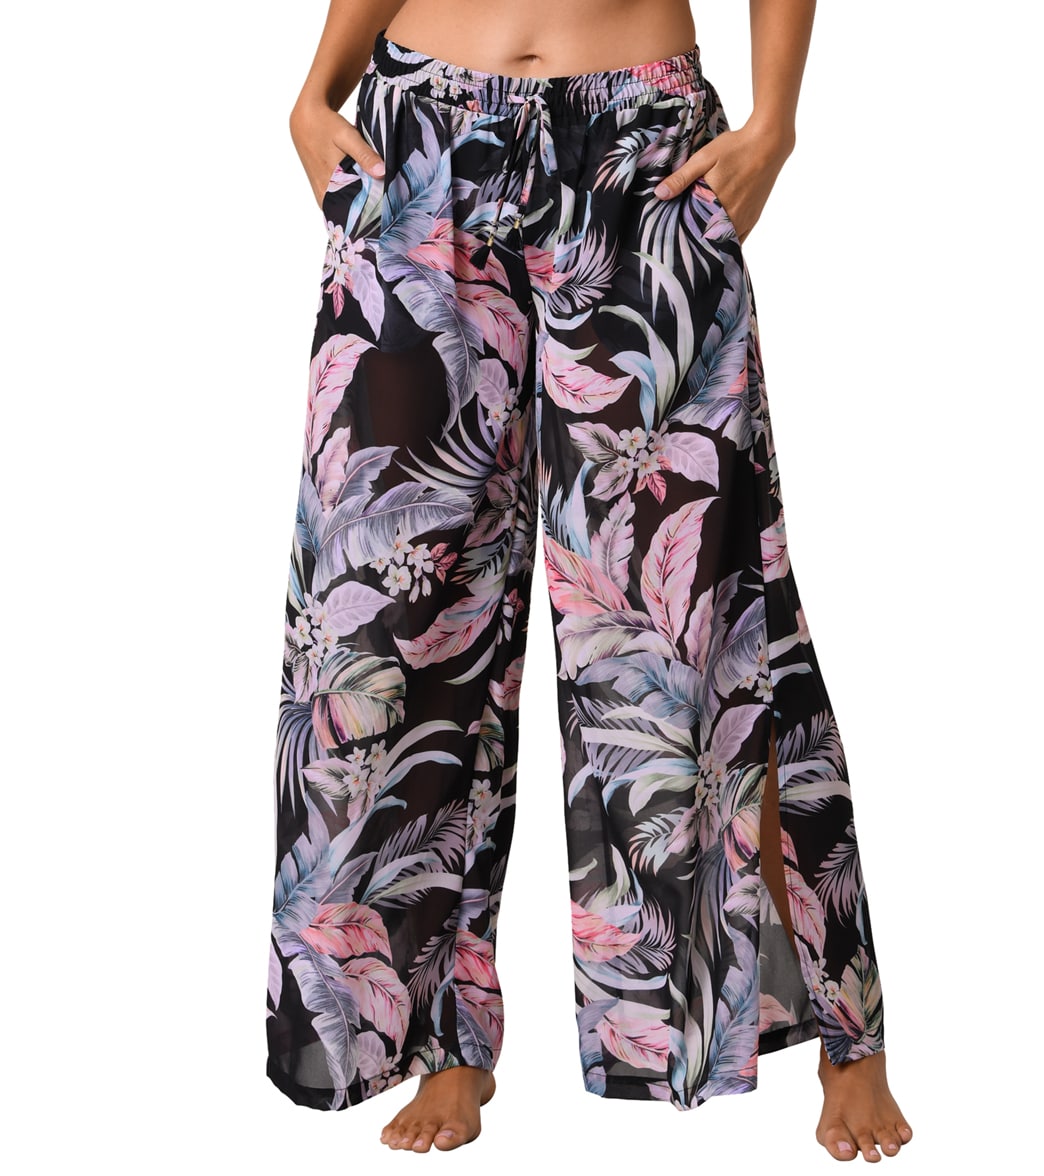 Jantzen Women's Cabana Queen Cover Up Pants - Black Medium Polyester - Swimoutlet.com